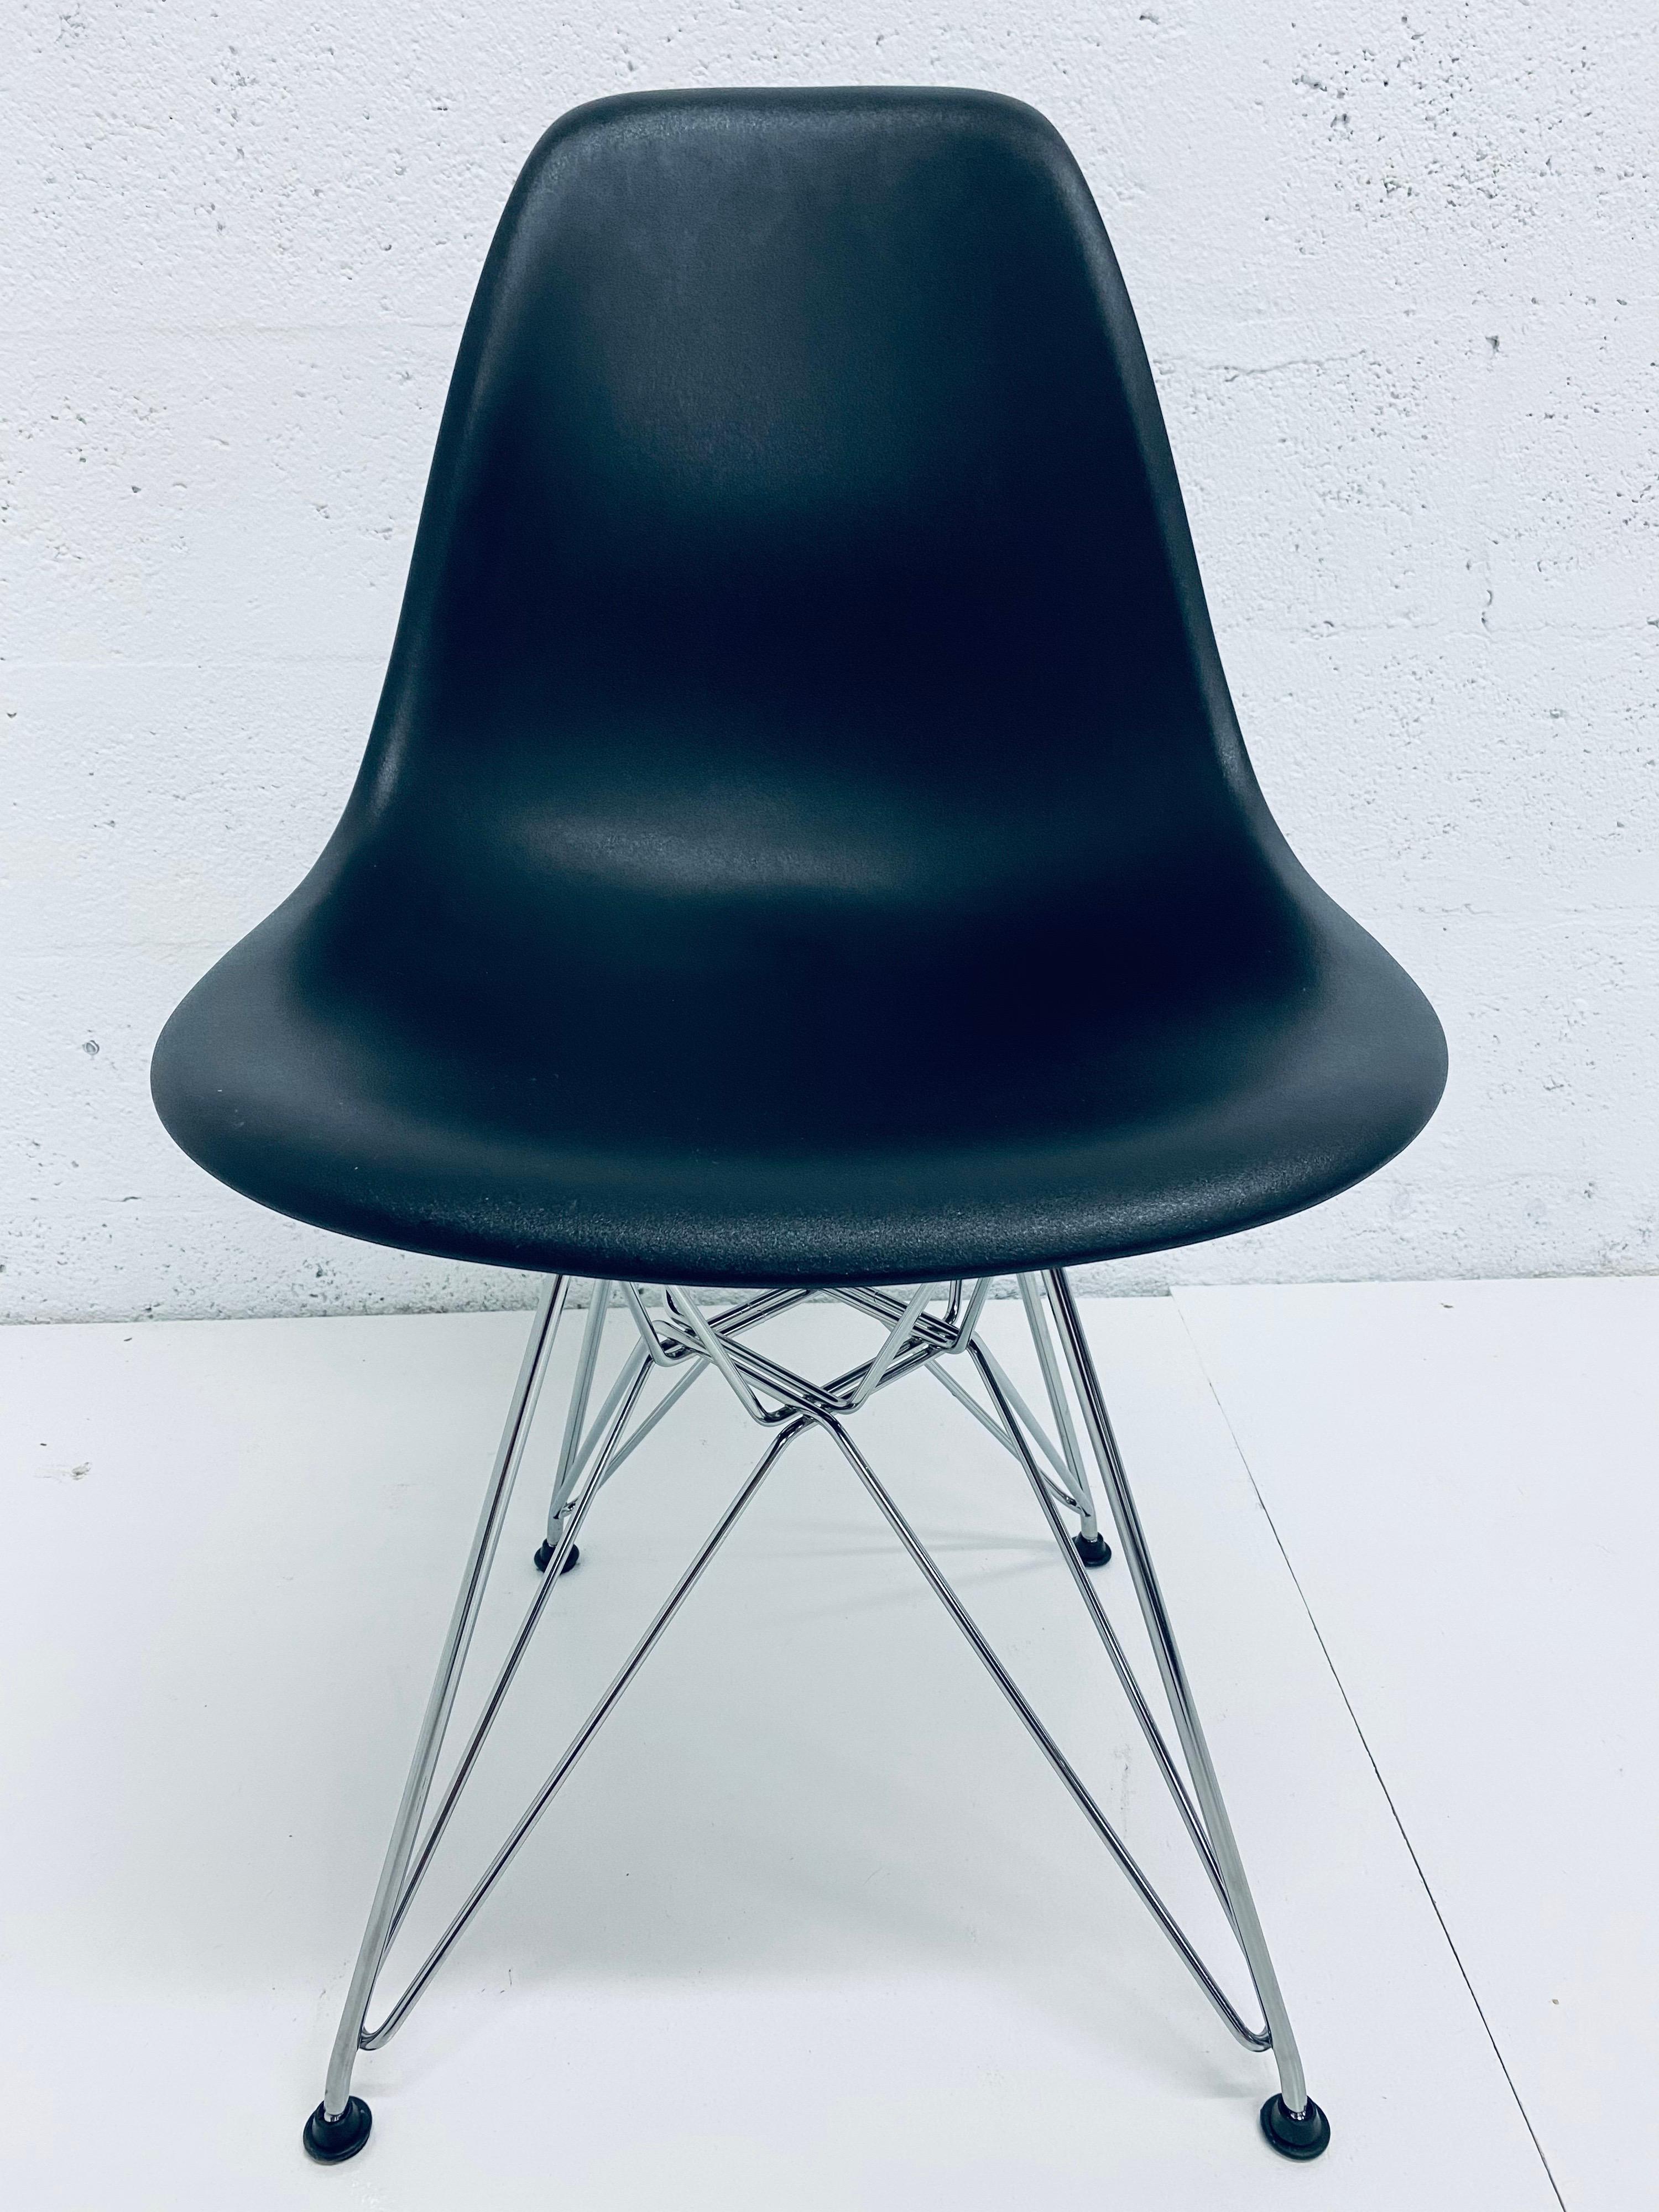 American Pair of Eames Black Molded Plastic Side Chair for Herman Miller